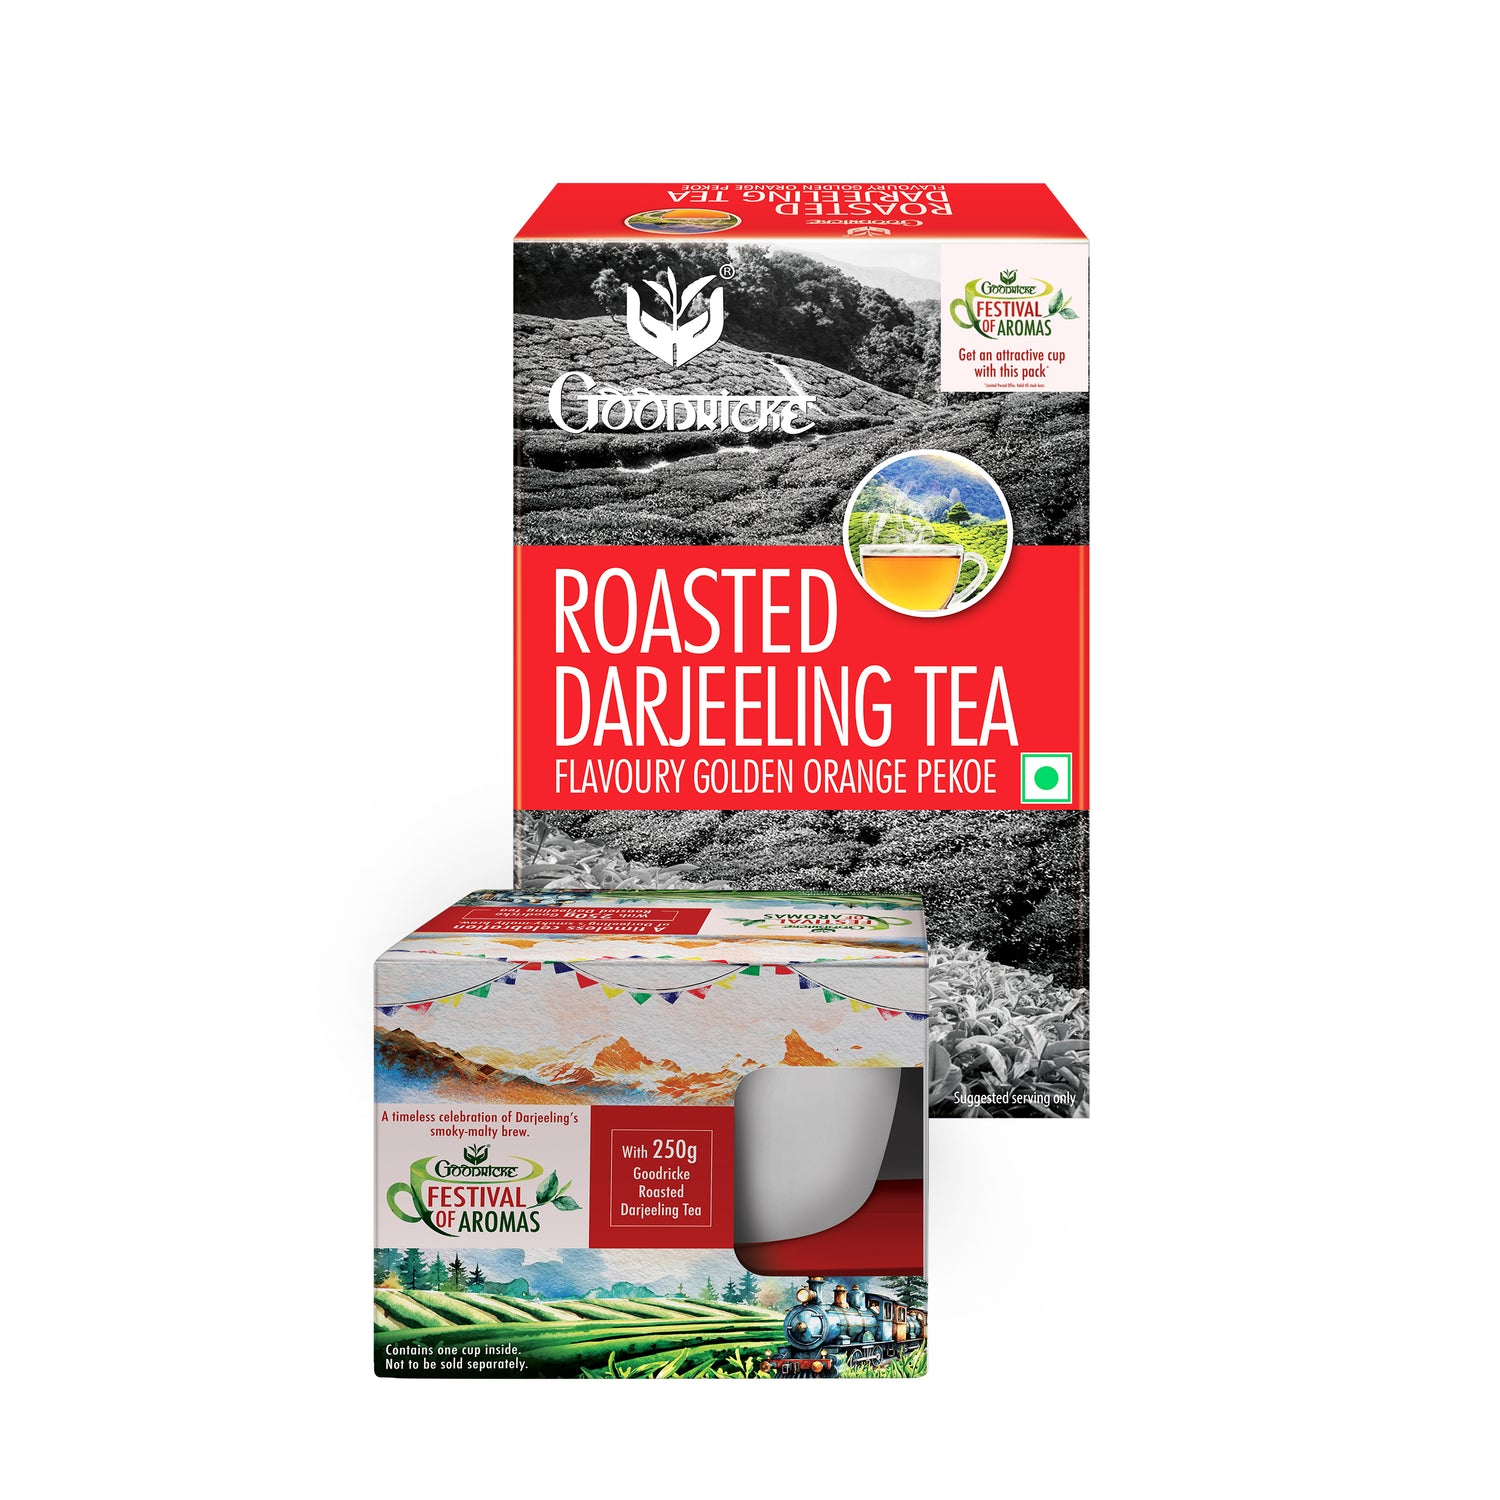 Darjeeling Tea new